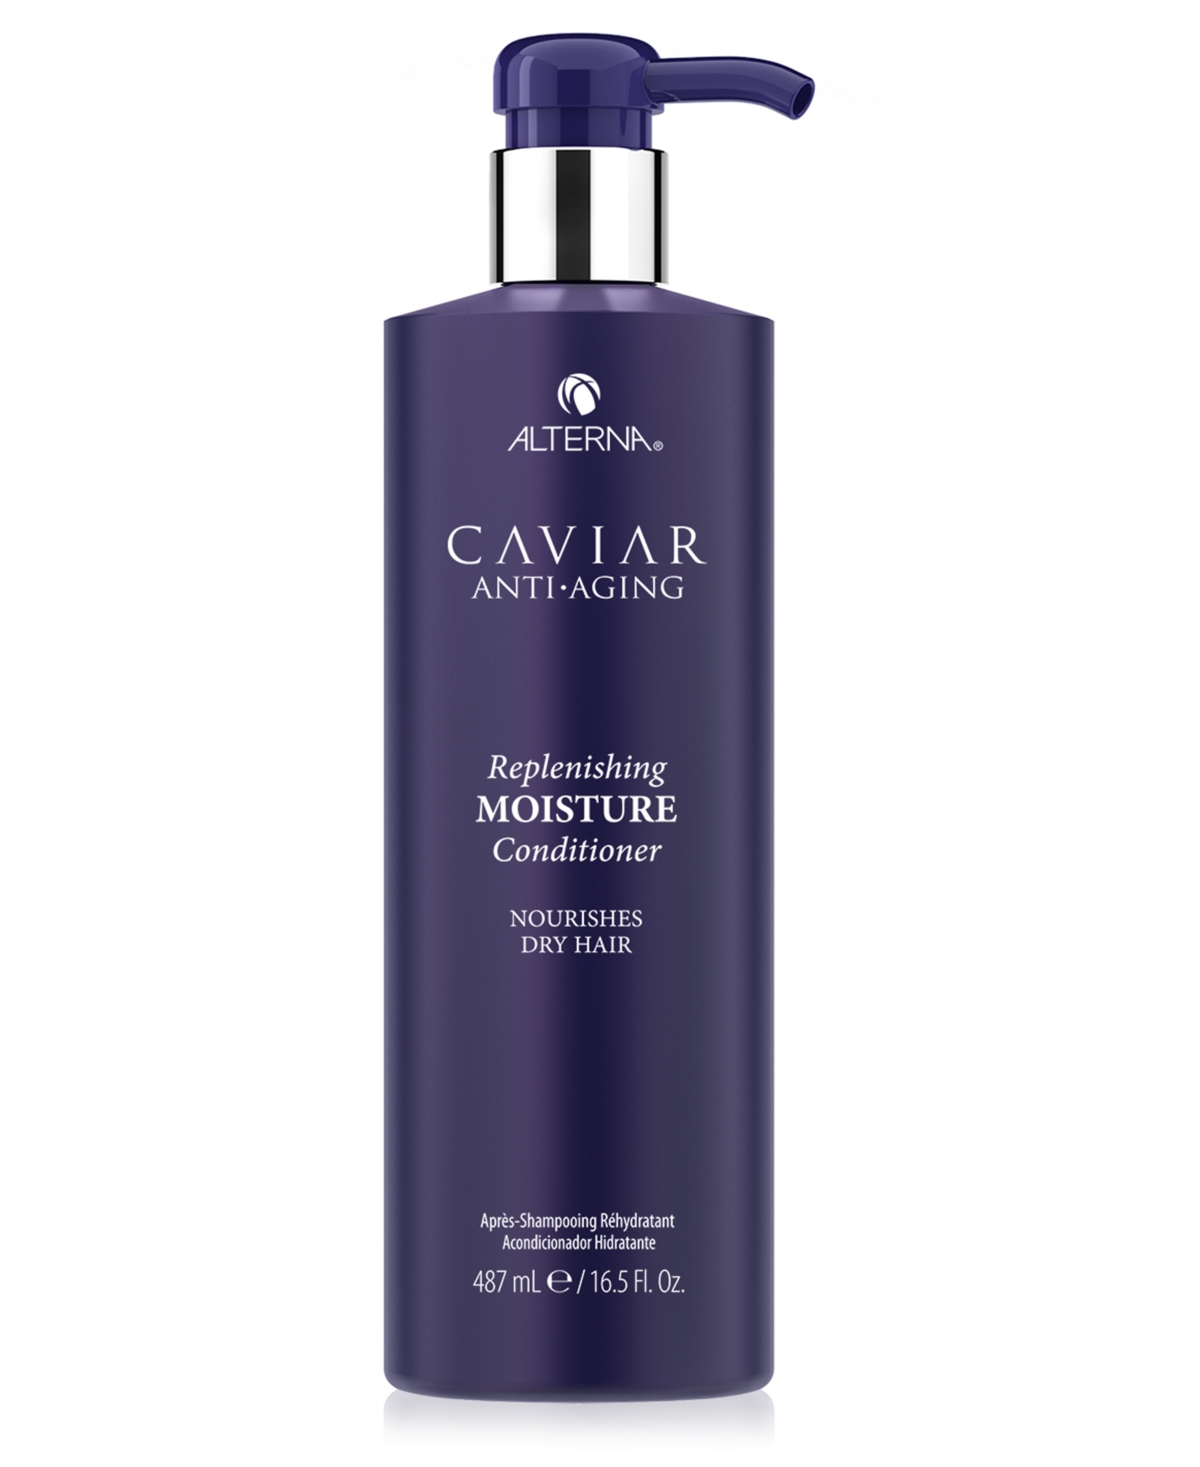 Alterna Caviar Anti-Aging Replenishing Moisture Conditioner, 16.5-oz.